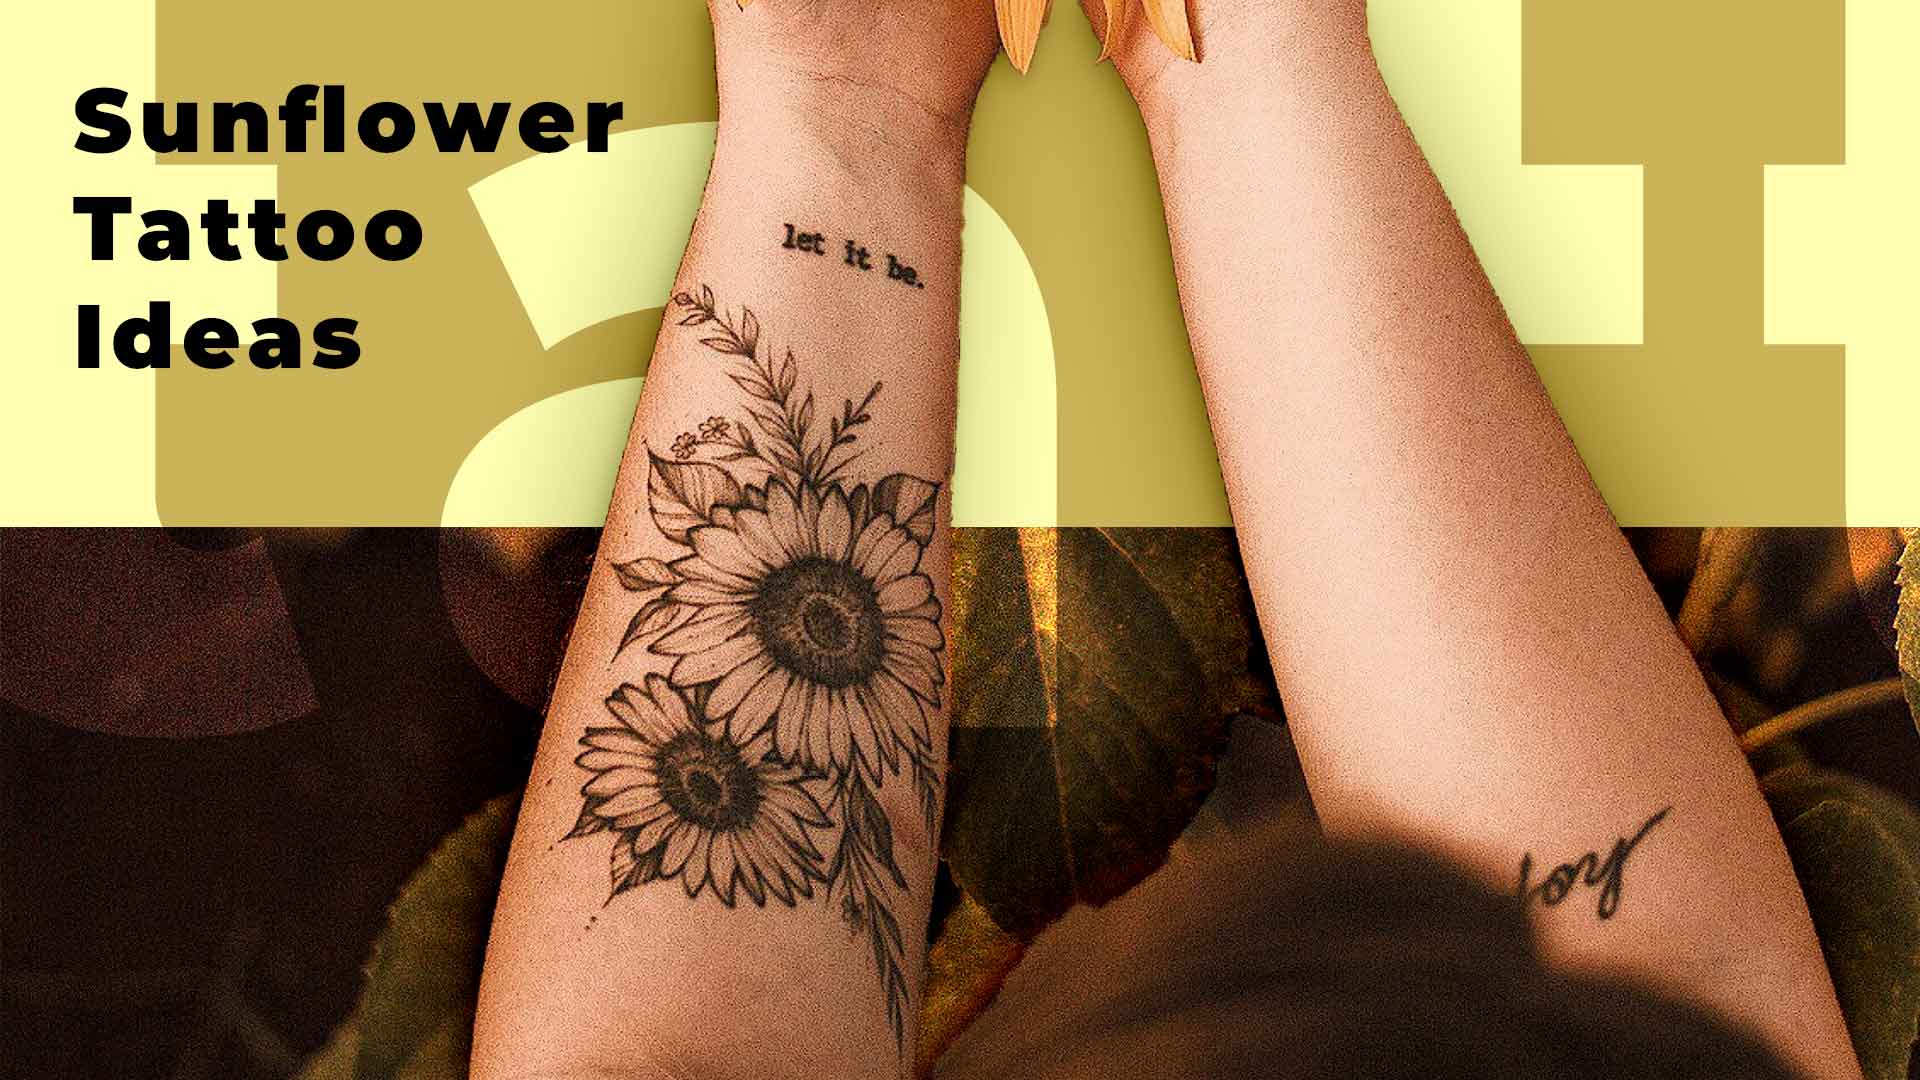 5. Sunflower Tattoo Ideas